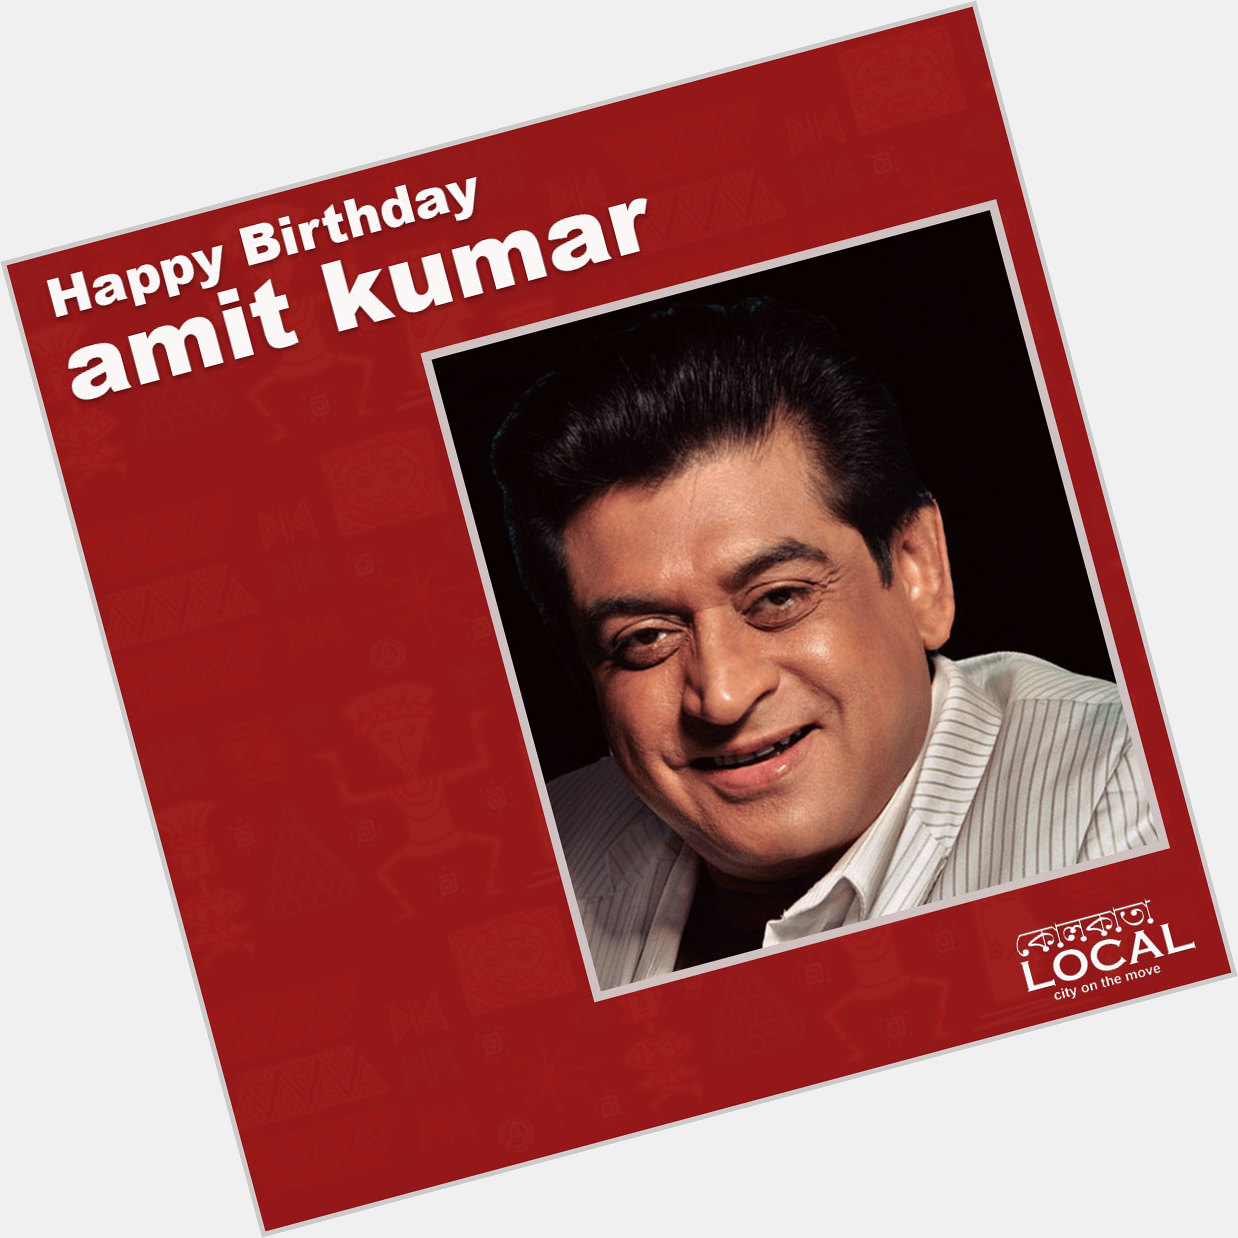 Wishing a very happy birthday to Amit Kumar 